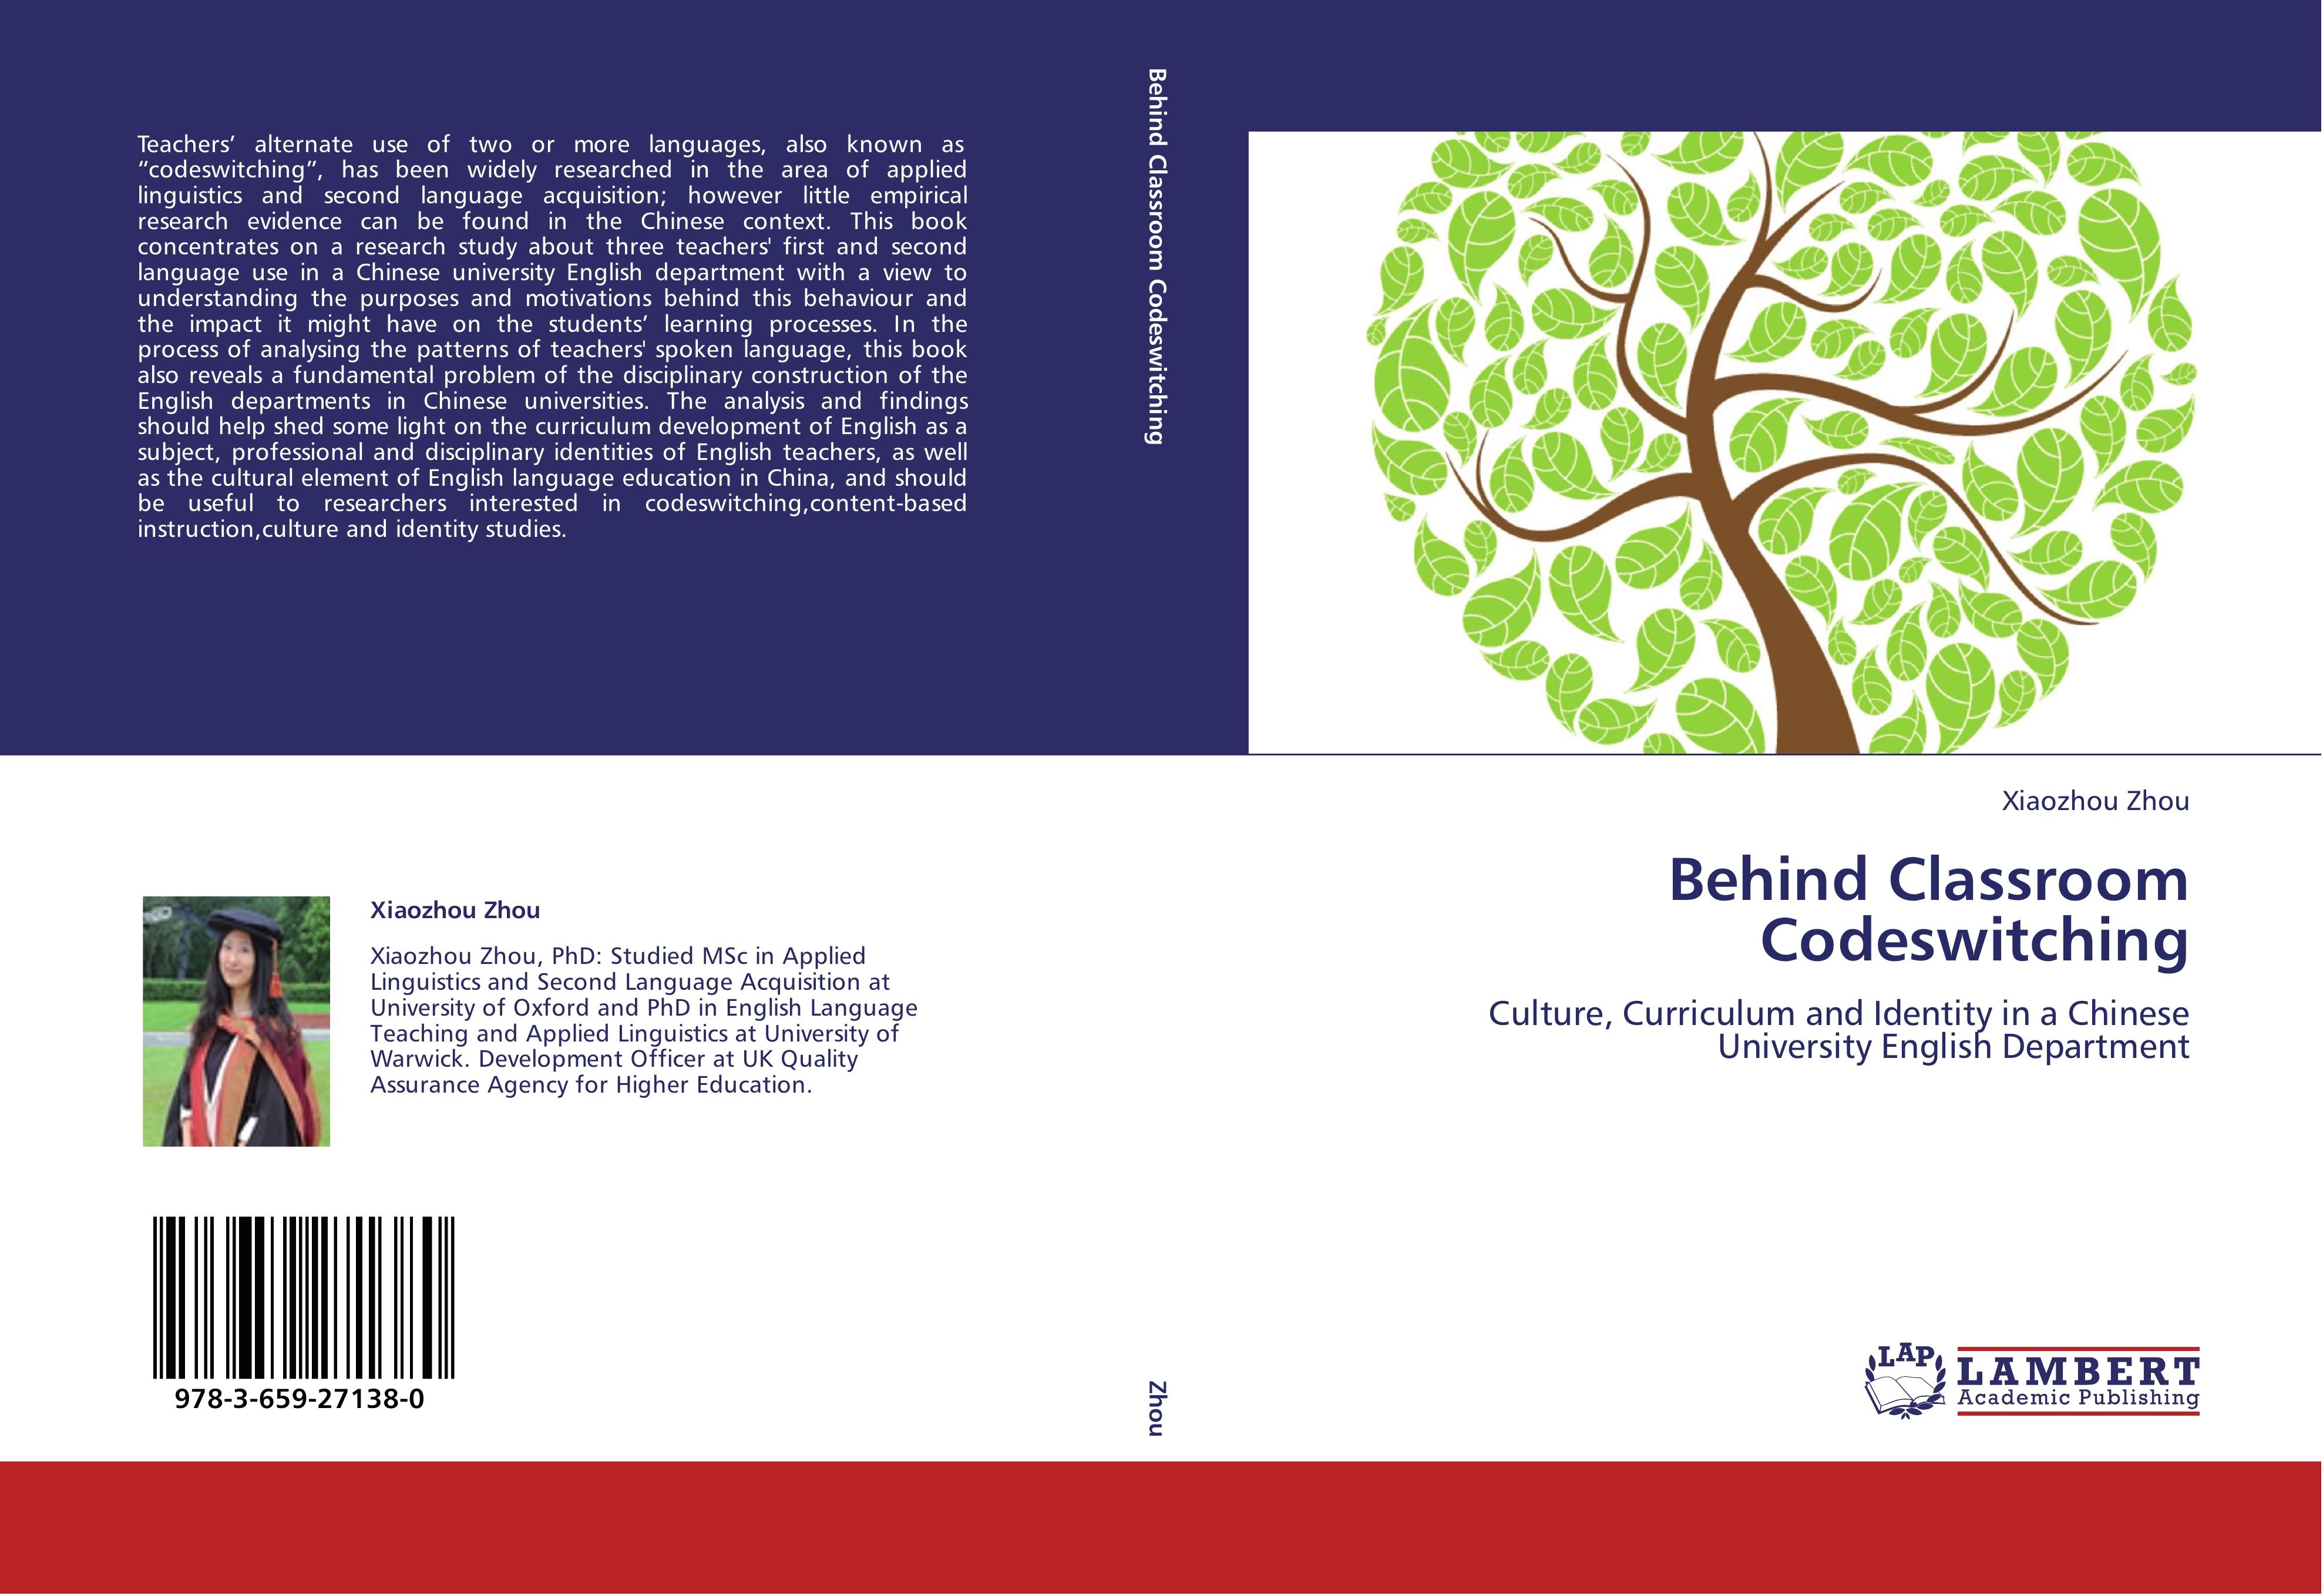 Behind Classroom Codeswitching / Culture, Curriculum and Identity in a Chinese University English Department / Xiaozhou Zhou / Taschenbuch / Paperback / 416 S. / Englisch / 2012 / EAN 9783659271380 - Zhou, Xiaozhou